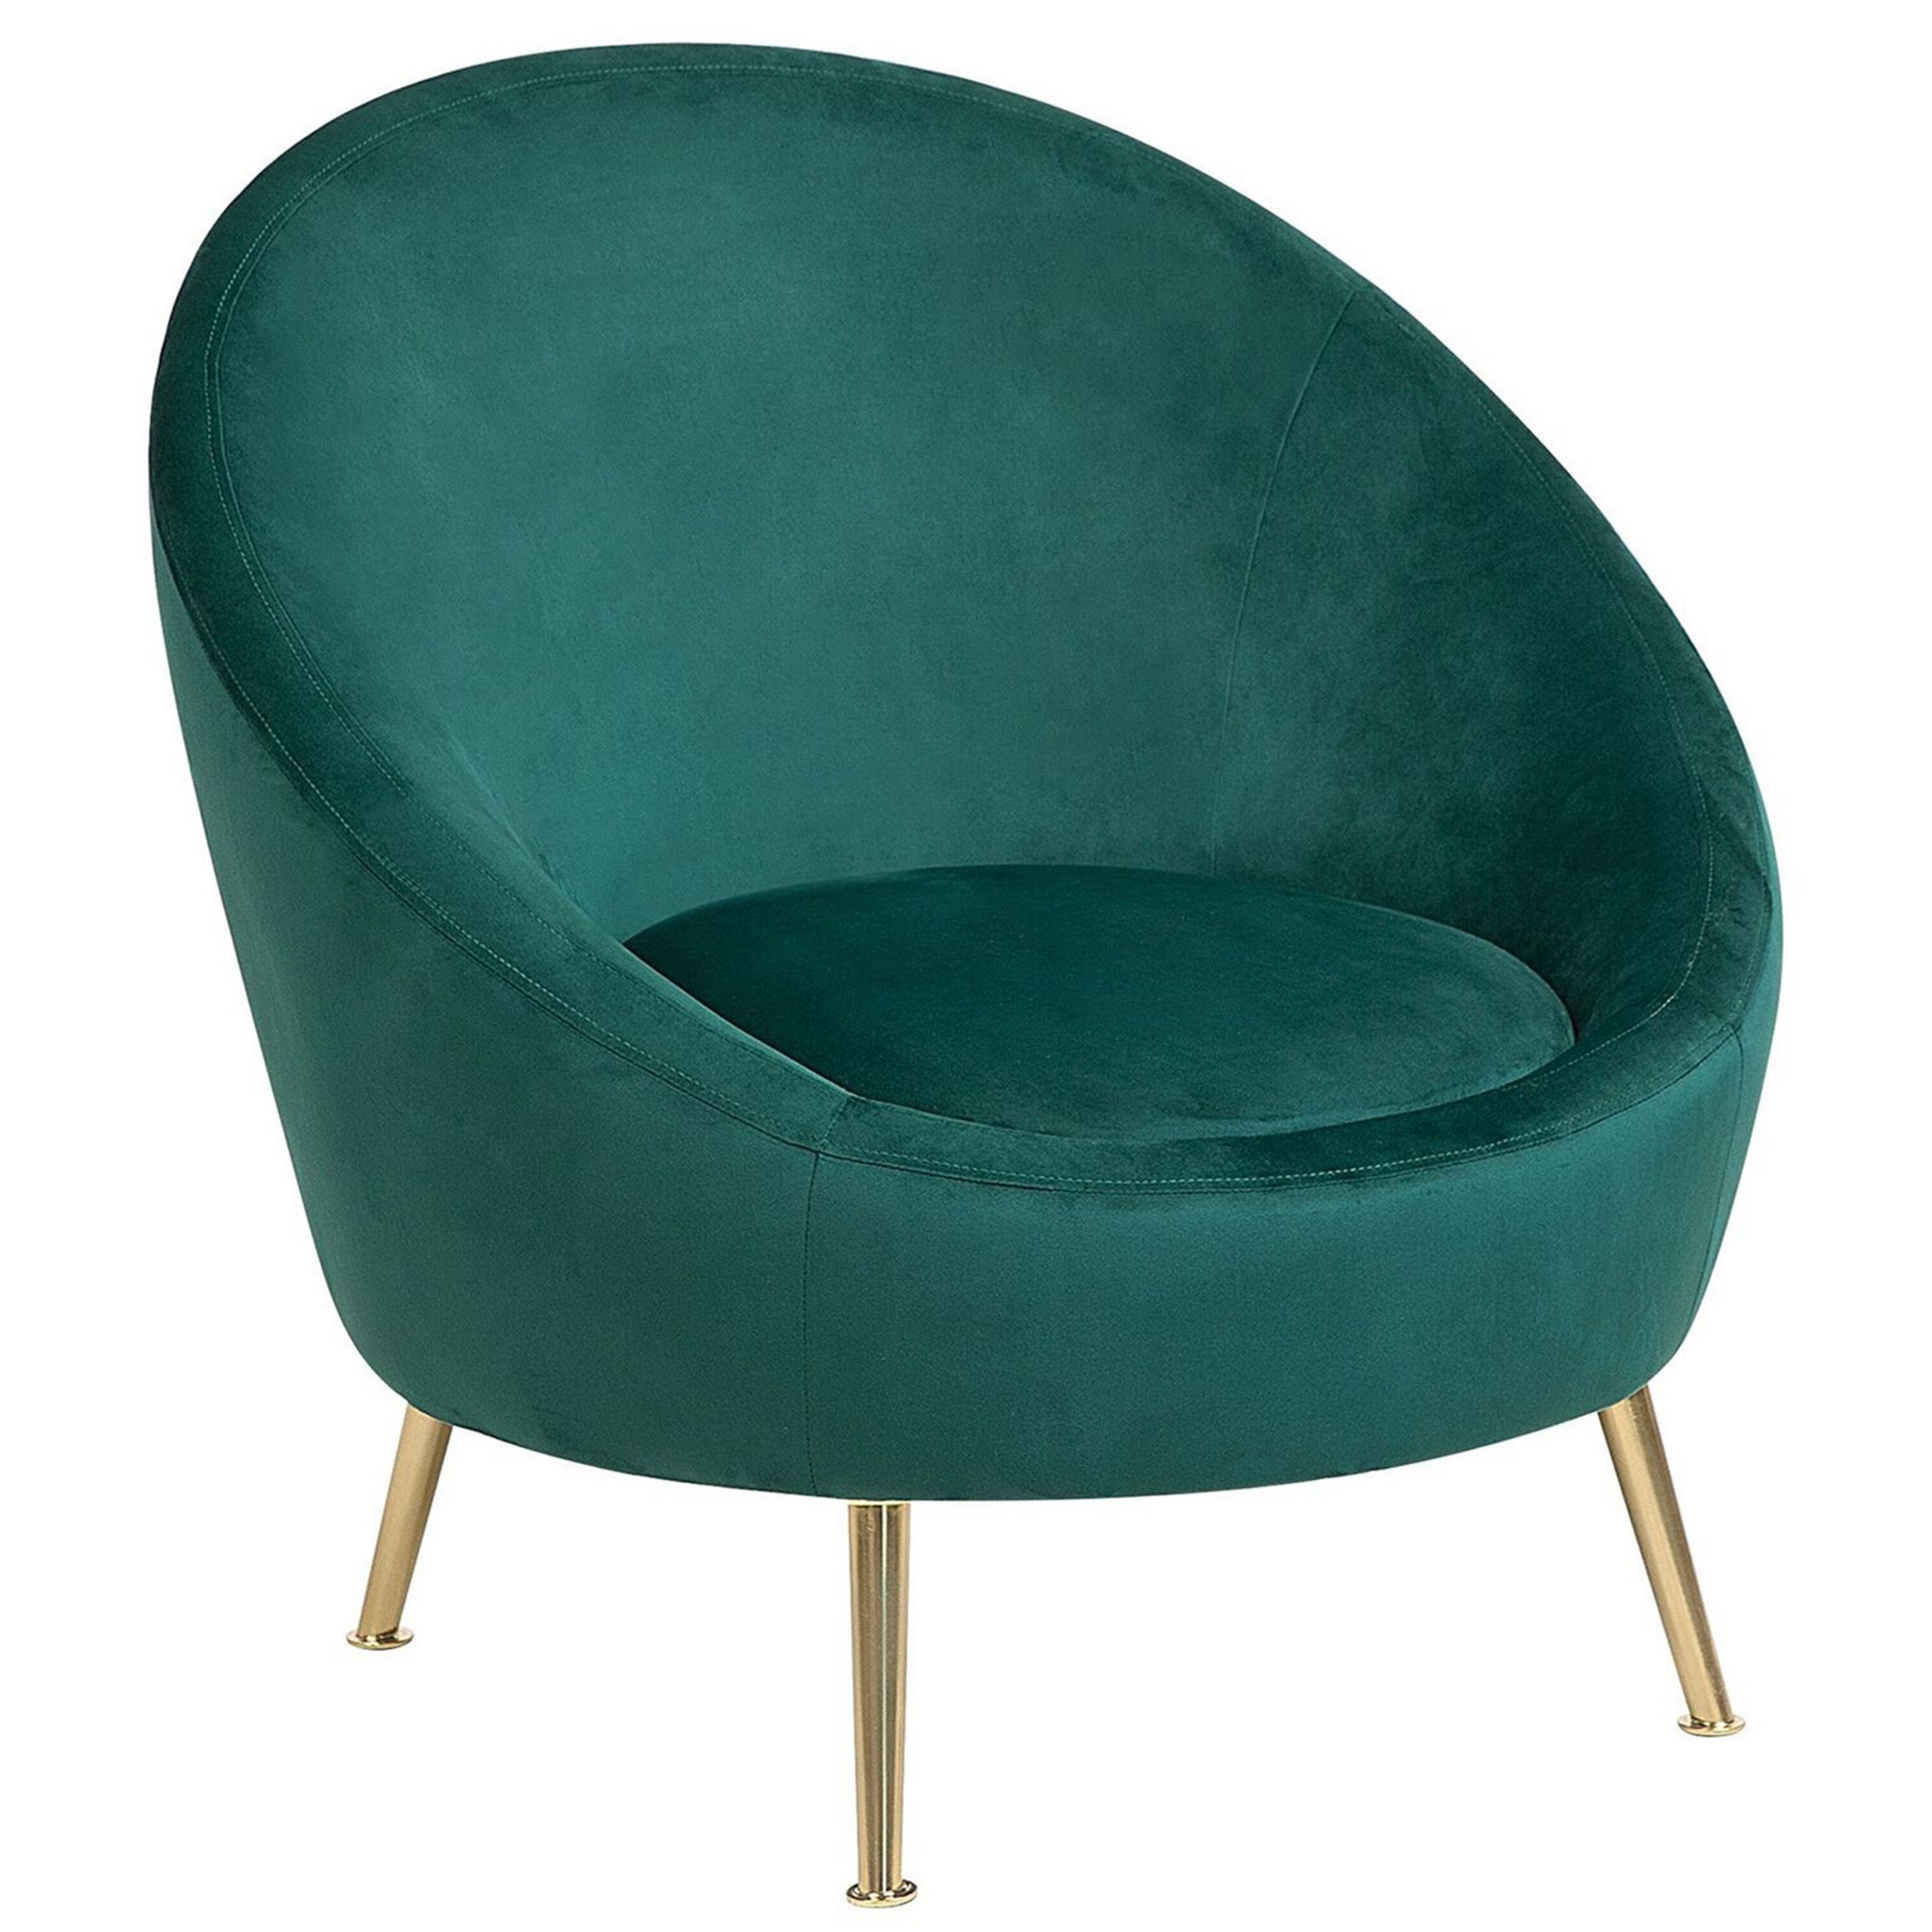 Beliani Tub Chair Green Velvet 76L x 80W x 81H cm Accent Gold Legs Glam Retro